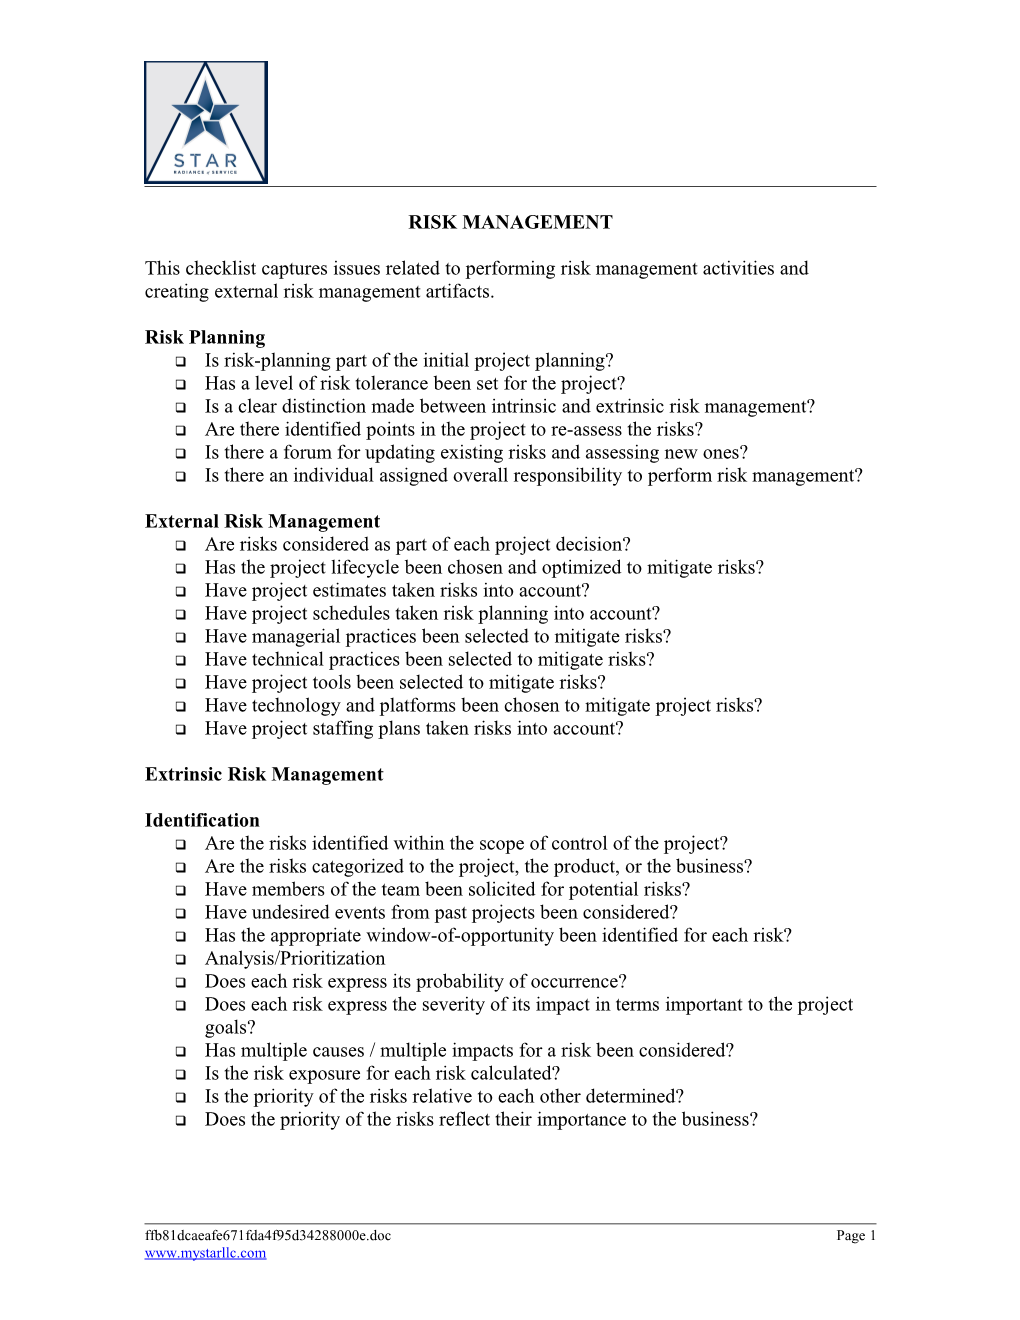 STAR, LLC Risk Management Checklist